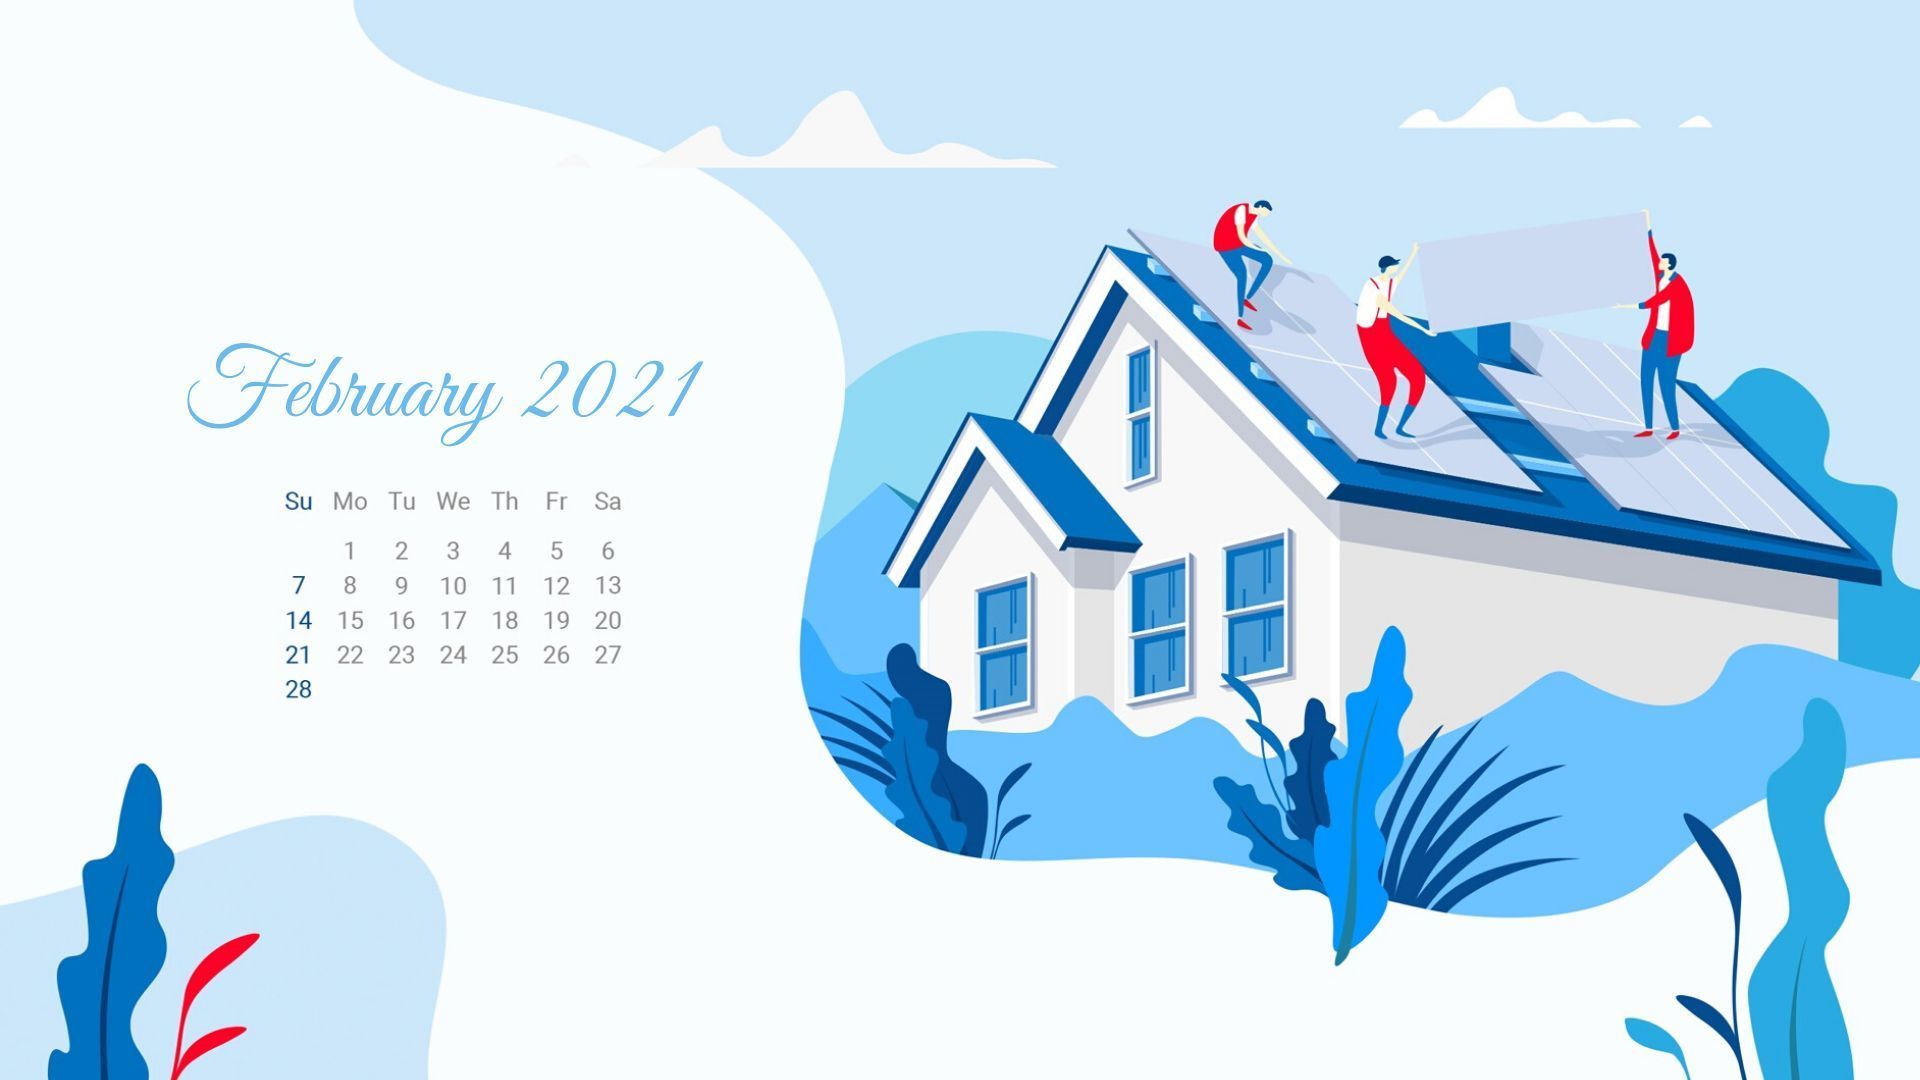 January 2021 Desktop Wallpaper Calendar Image ID 5